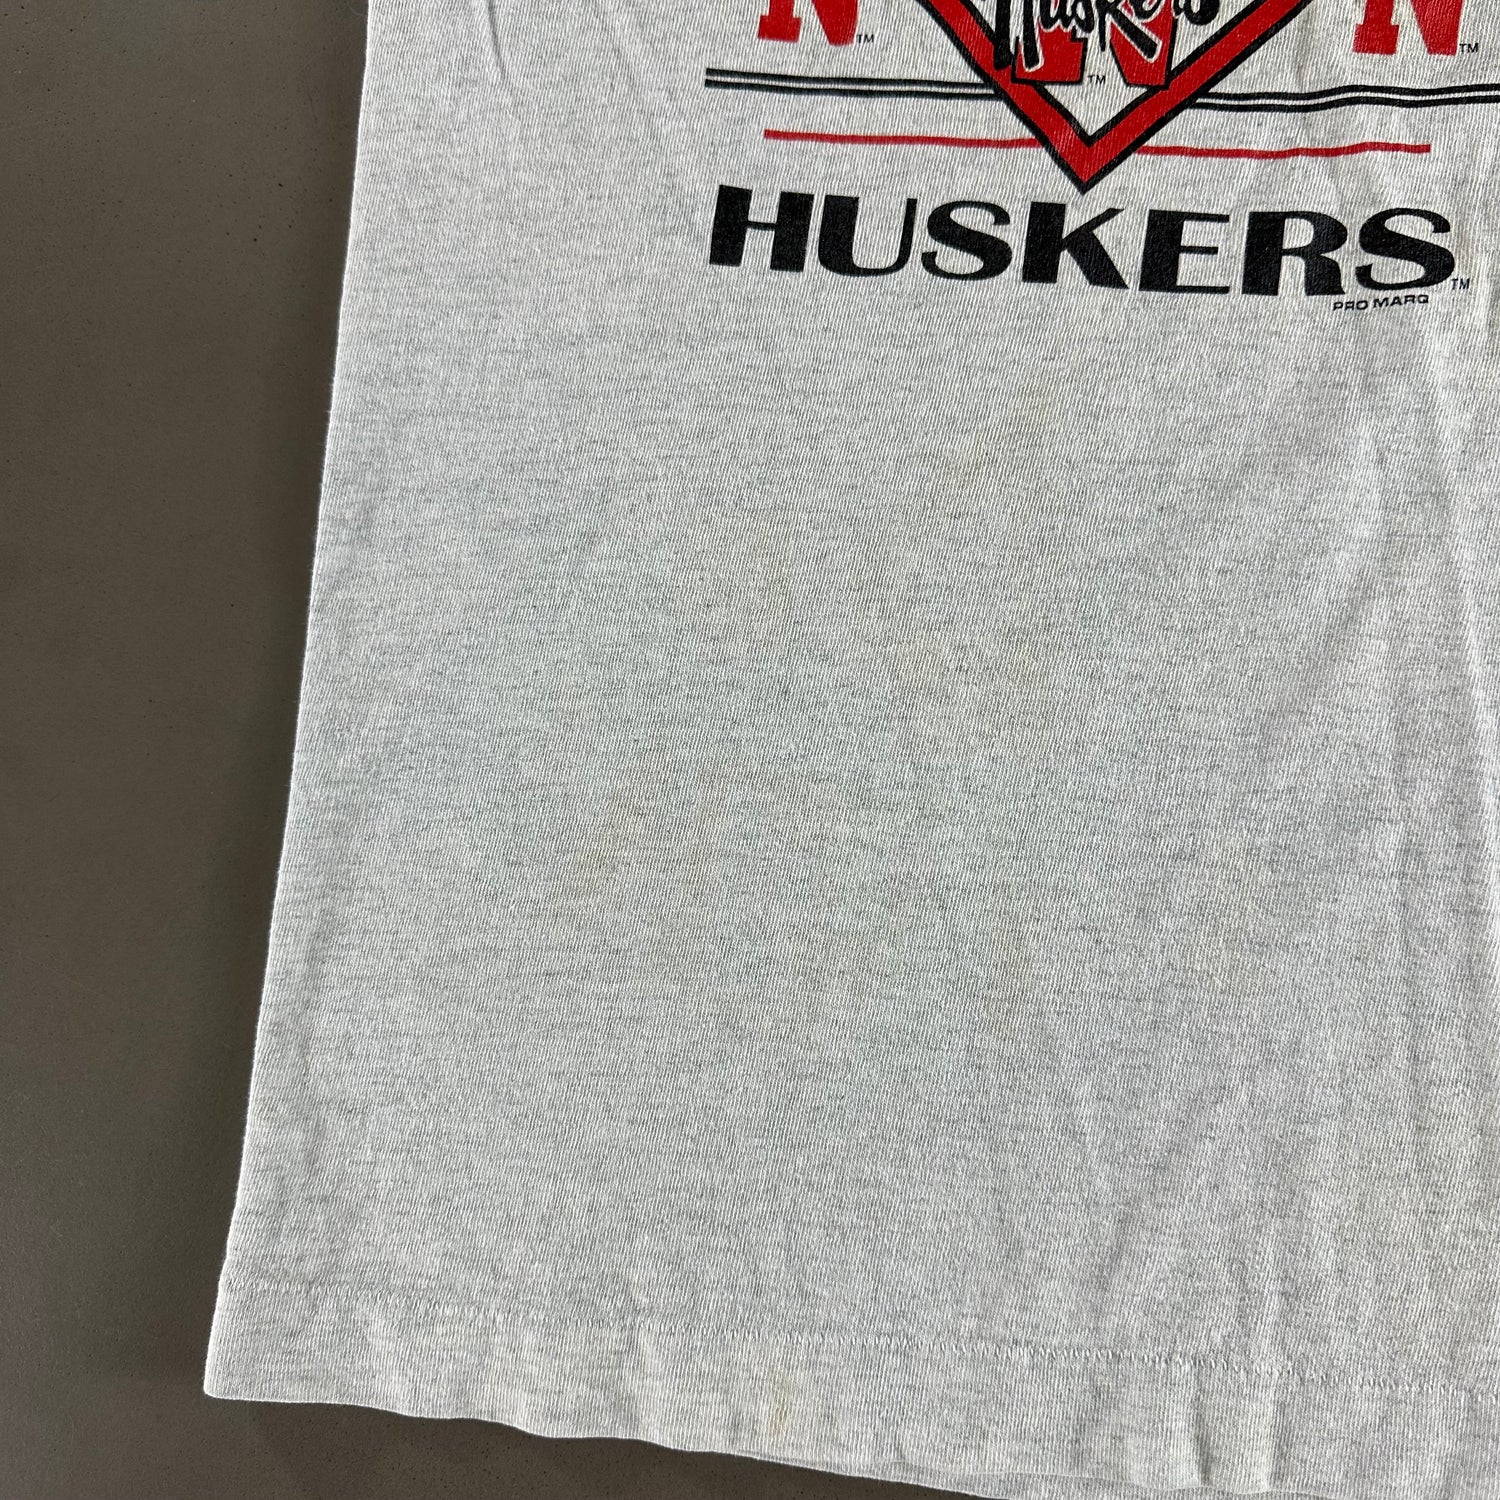 Vintage 1990s University of Nebraska T-shirt size Small